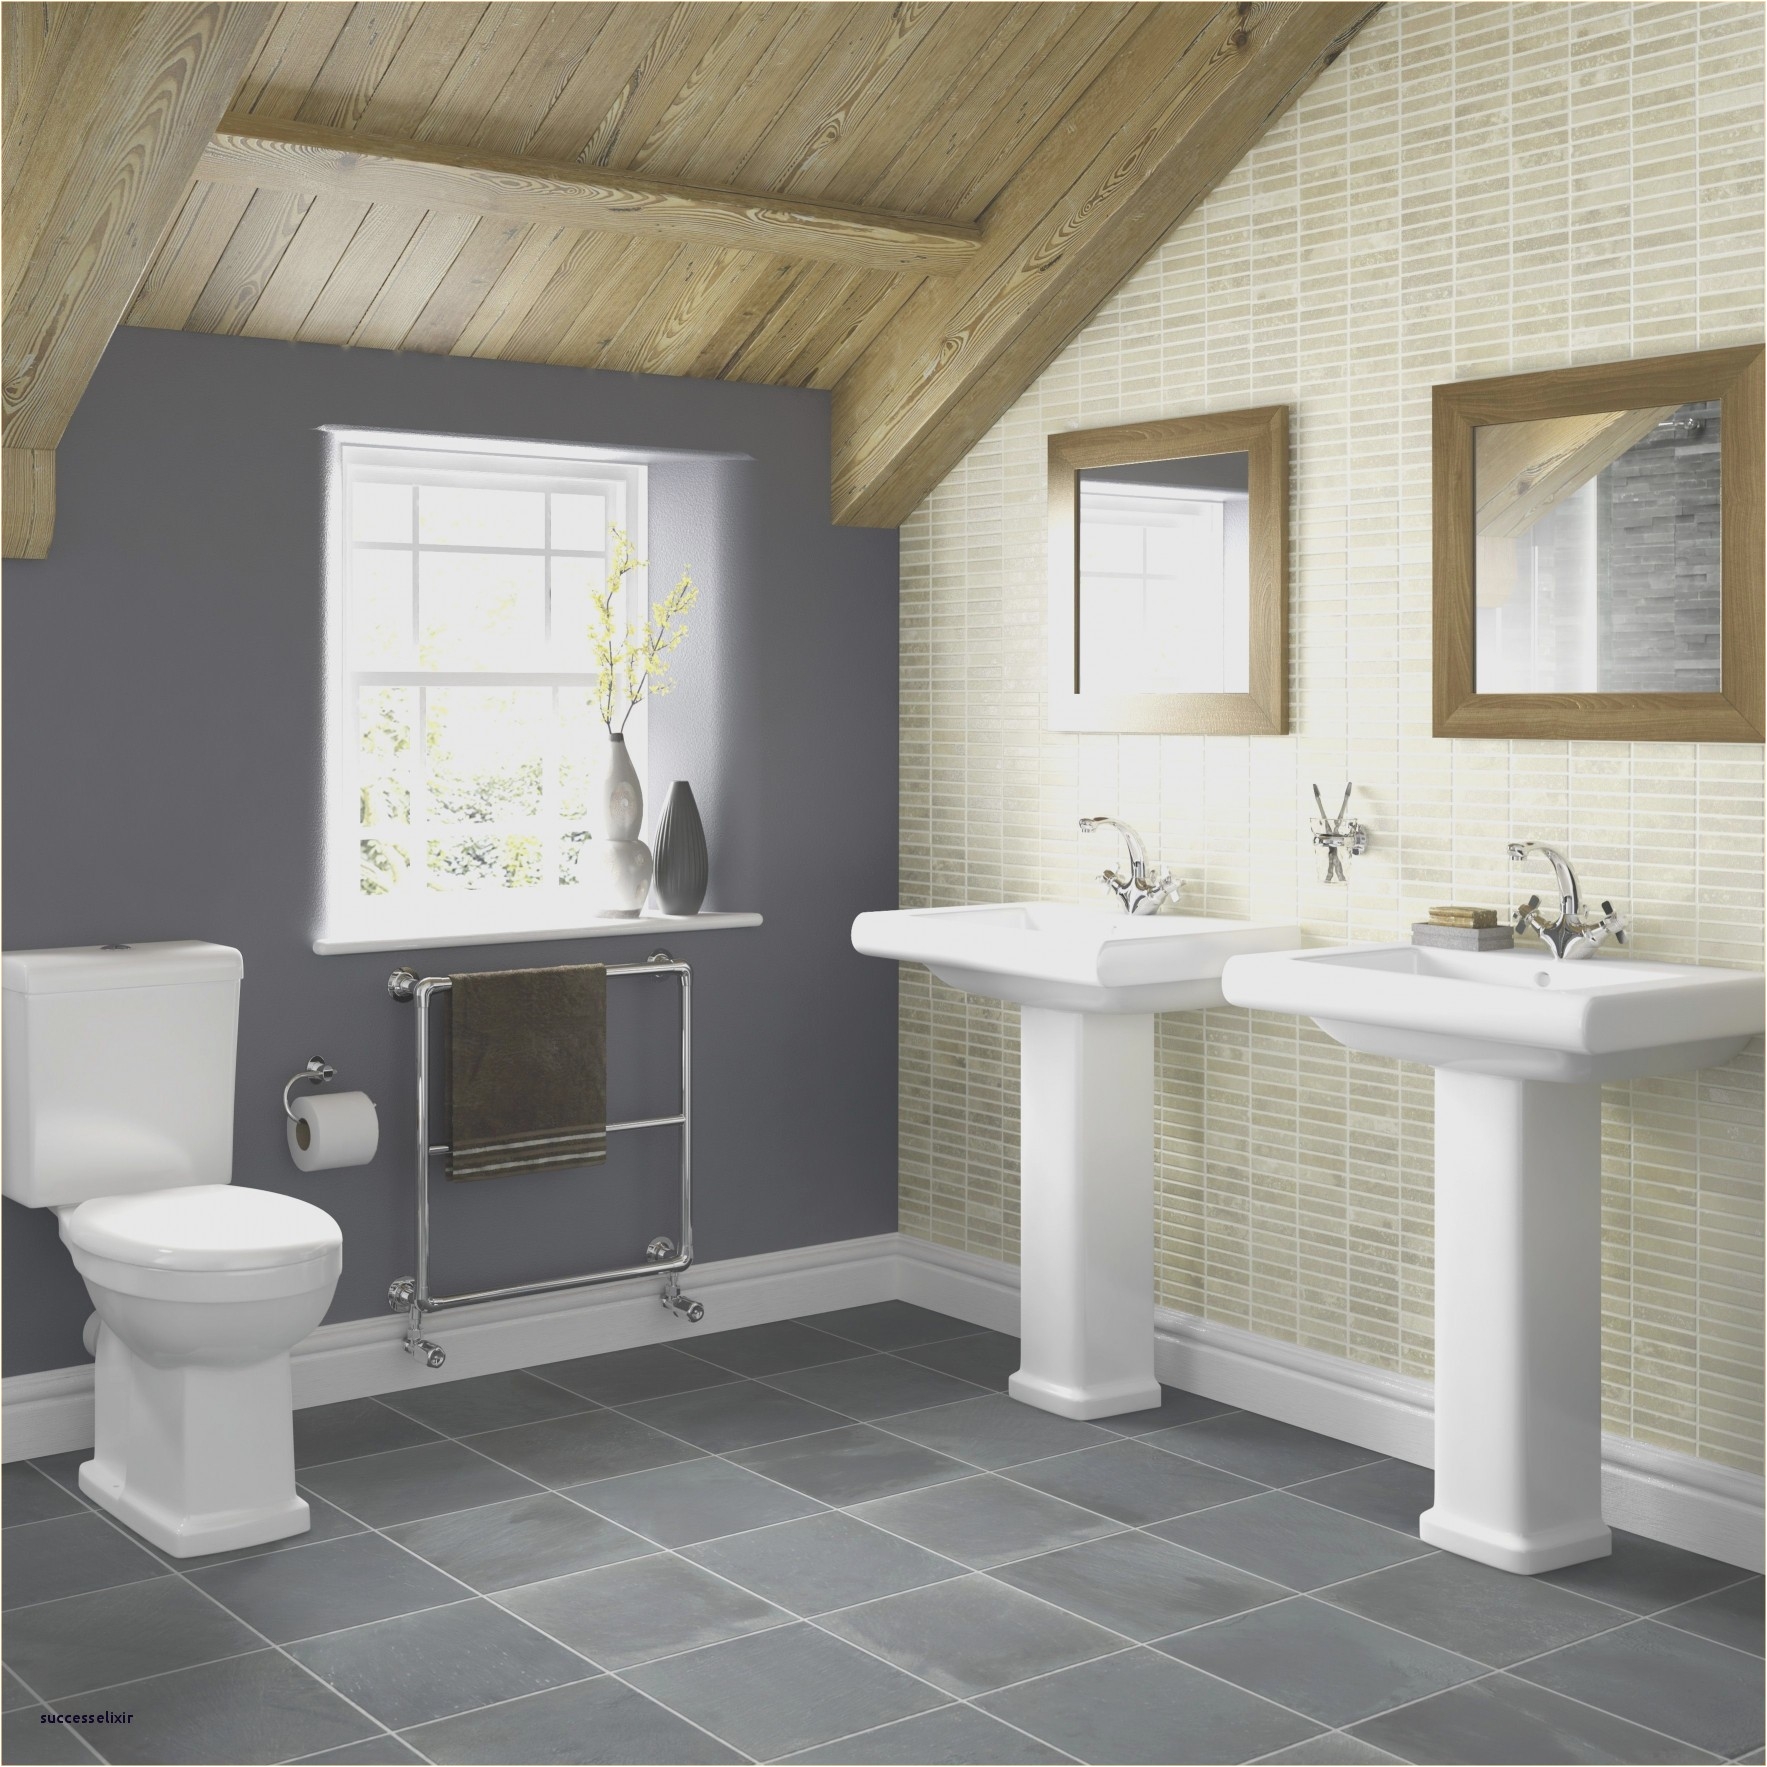 bathroom design idea new fresh fresh bathroom picture ideas lovely tag toilet ideas 0d best you